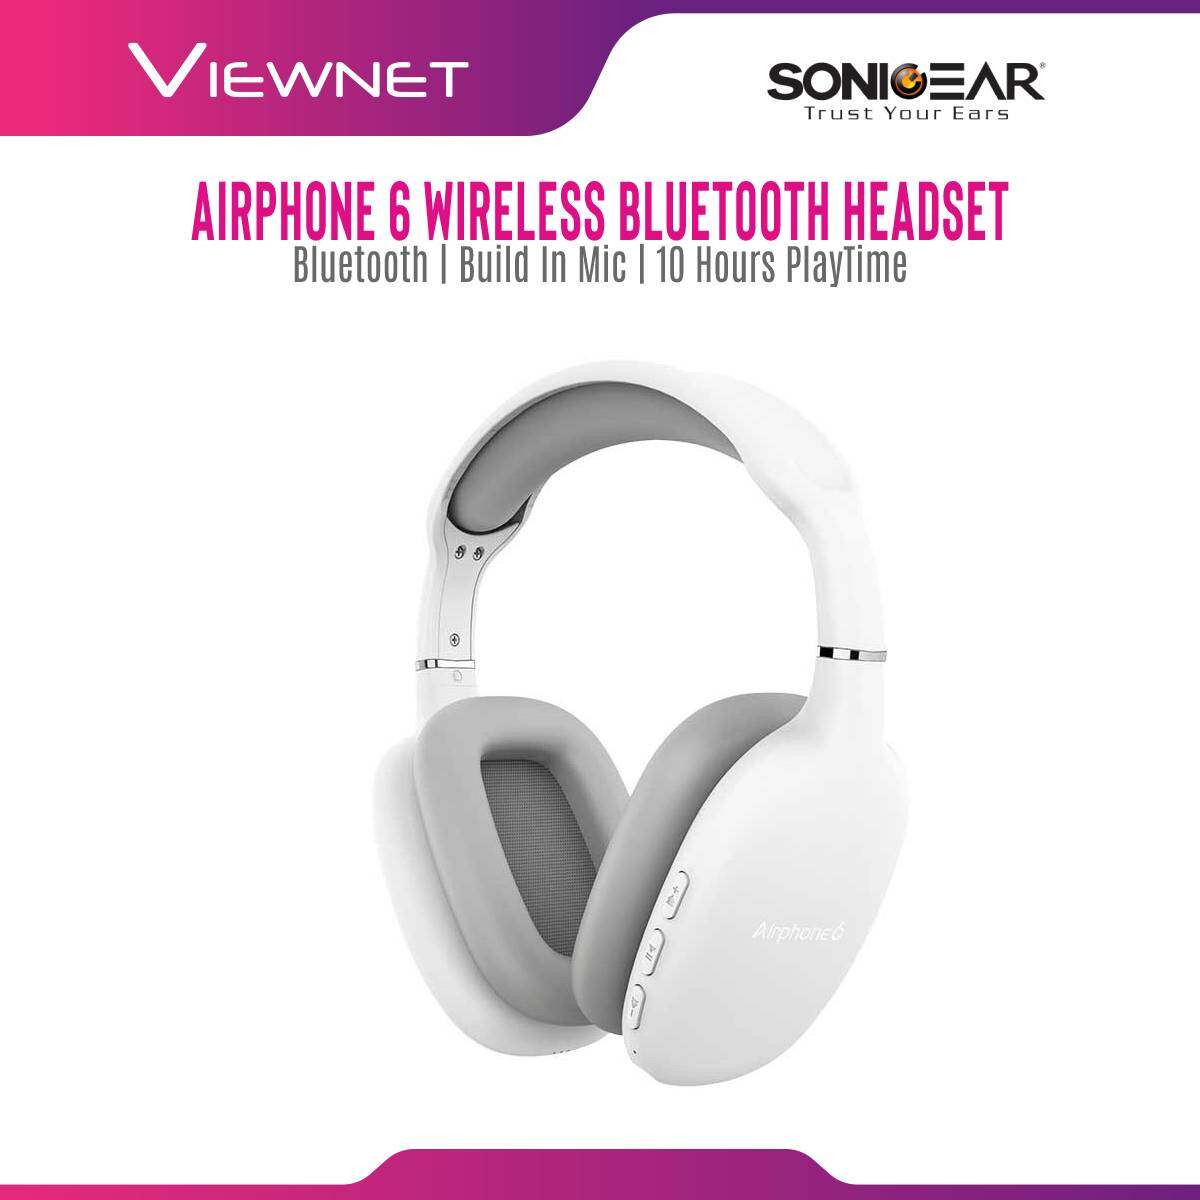 SonicGear Airphone 6 Wireless Bluetooth Headset